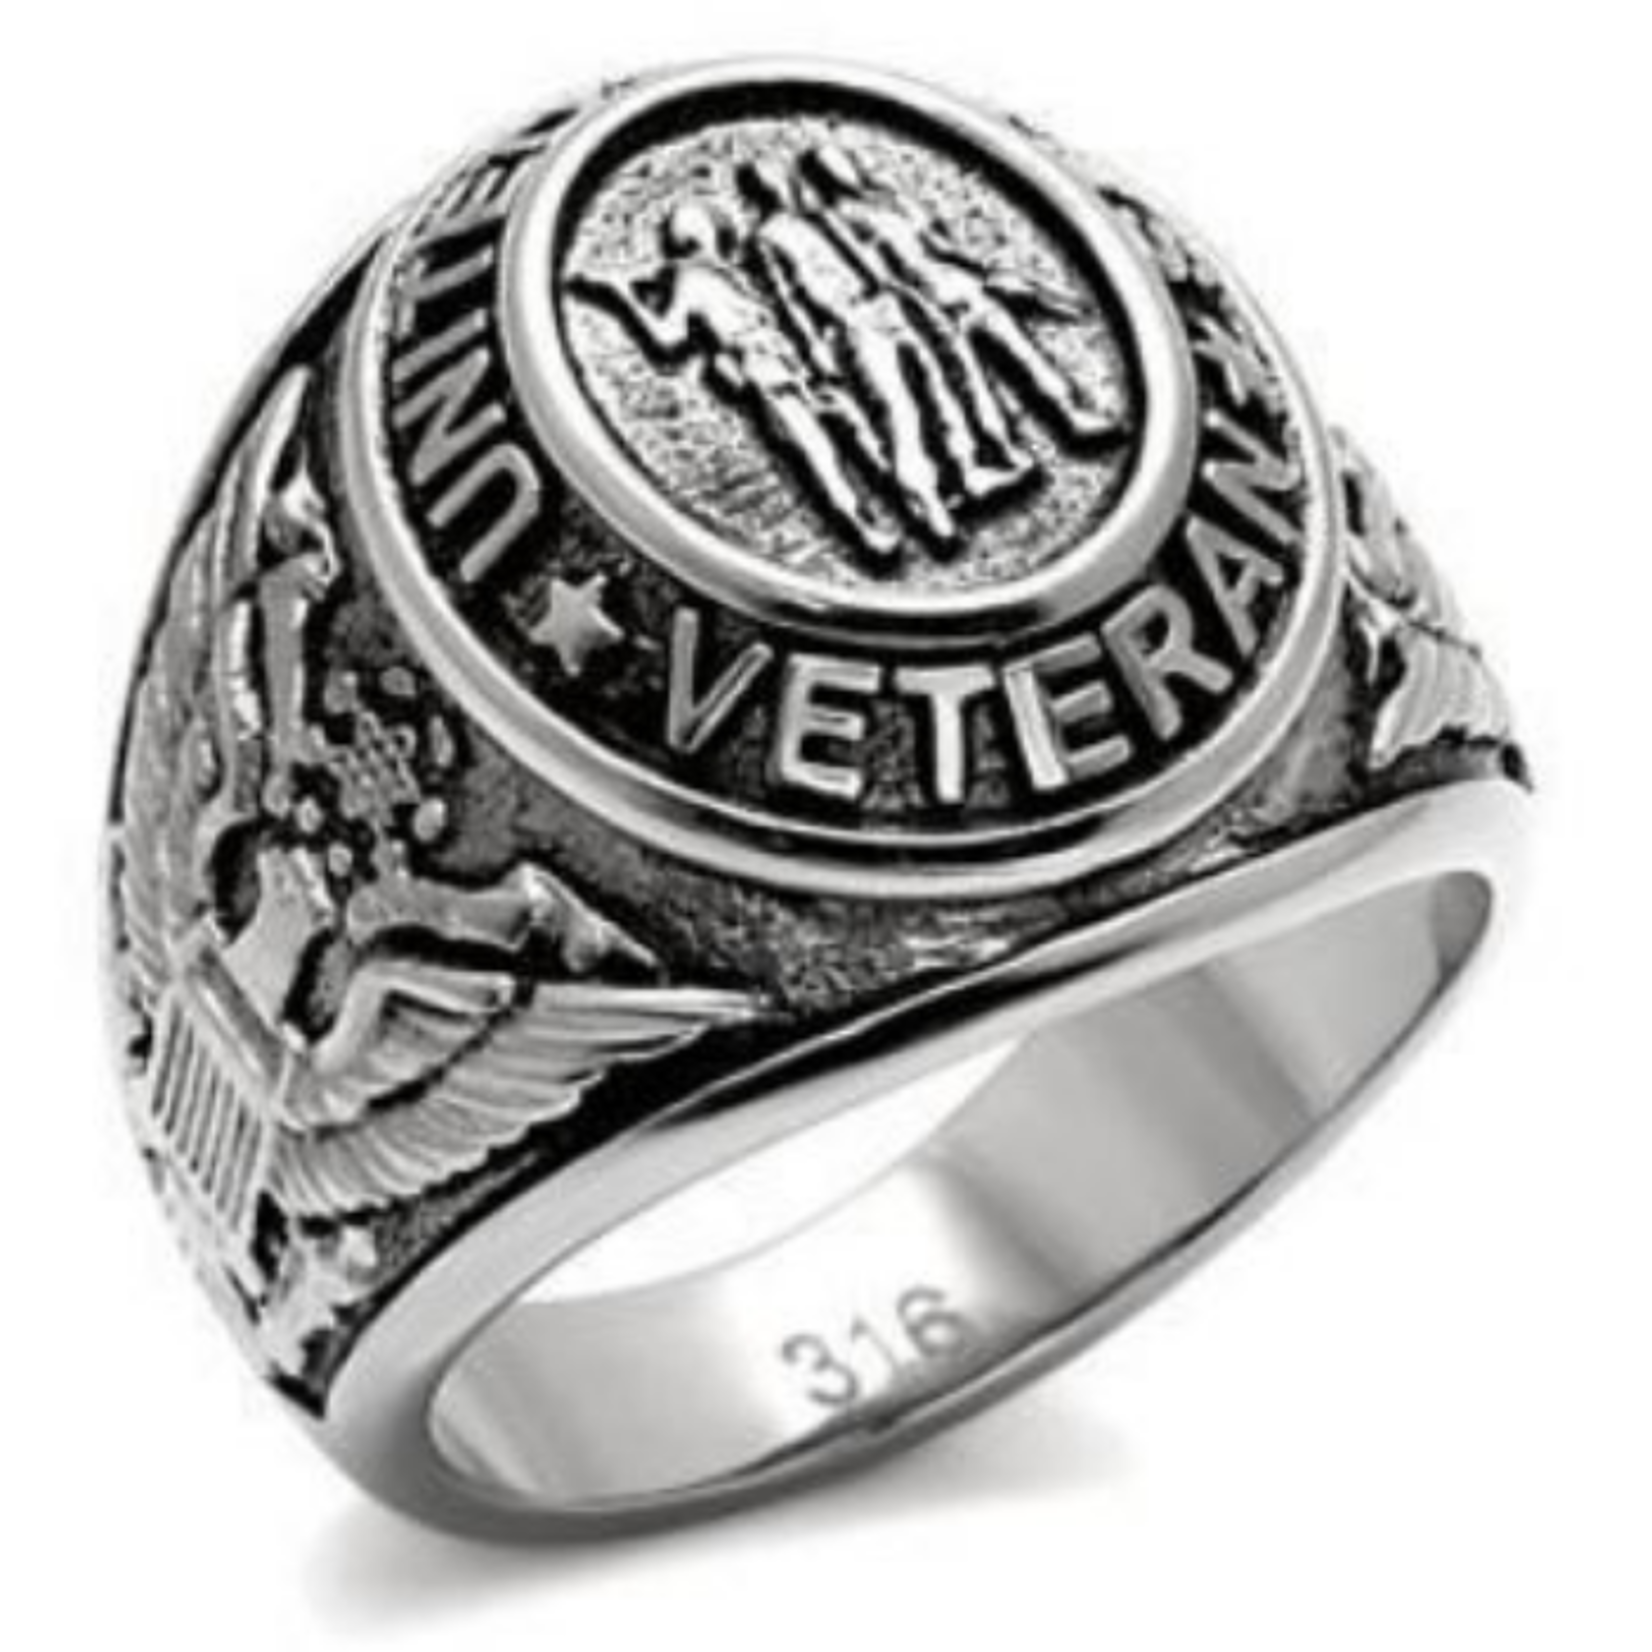 Stainless Steel "United States Veteran" Ring